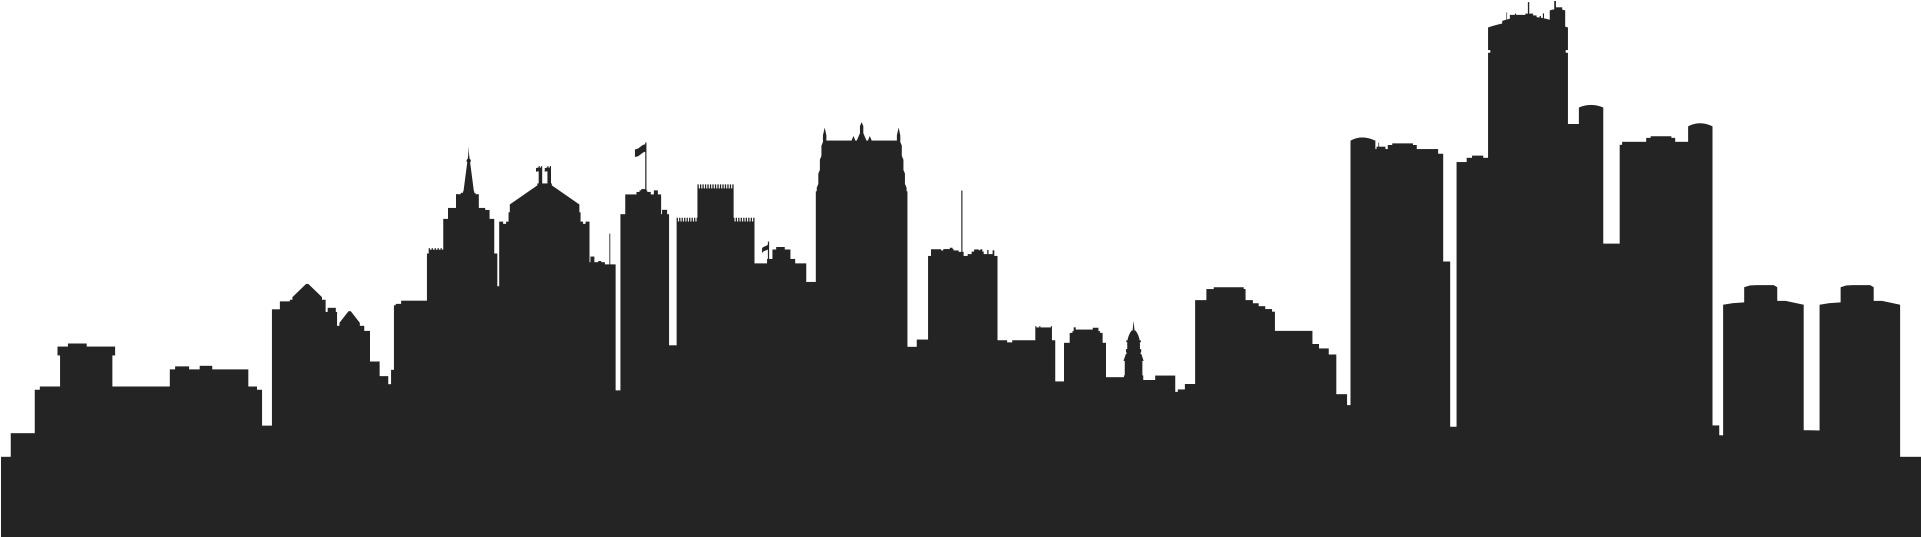 Next - Detroit Skyline Silhouette Png (1920x560)